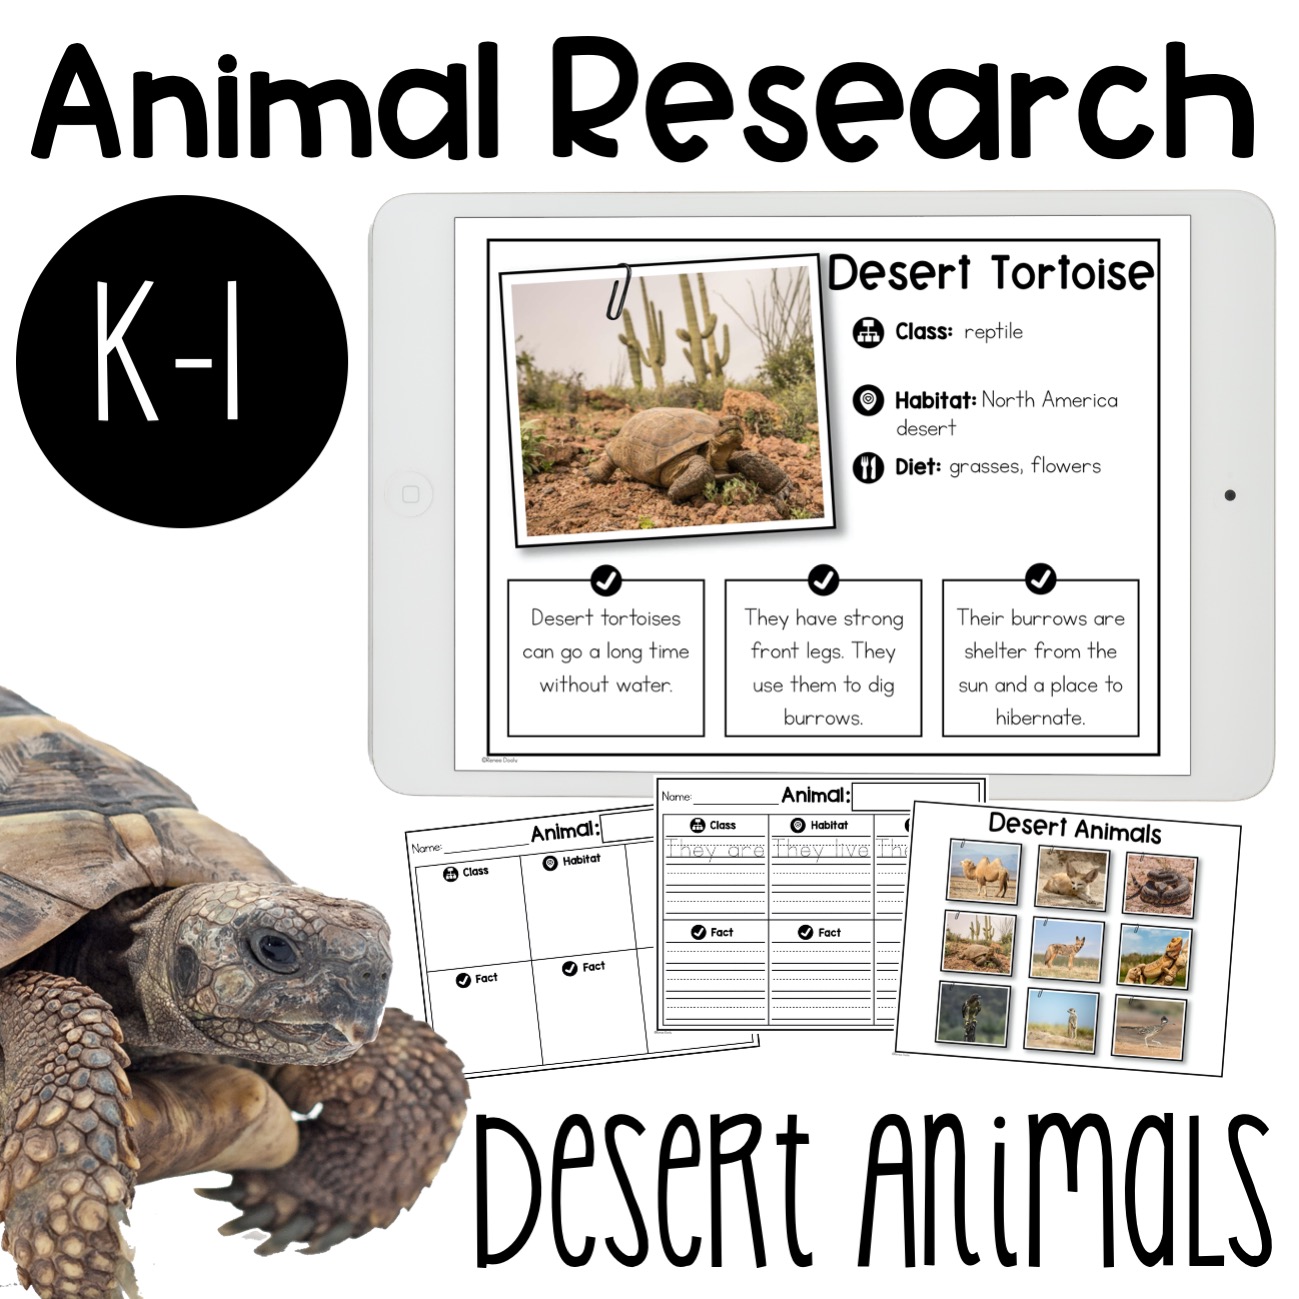 Desert Animal Research Report